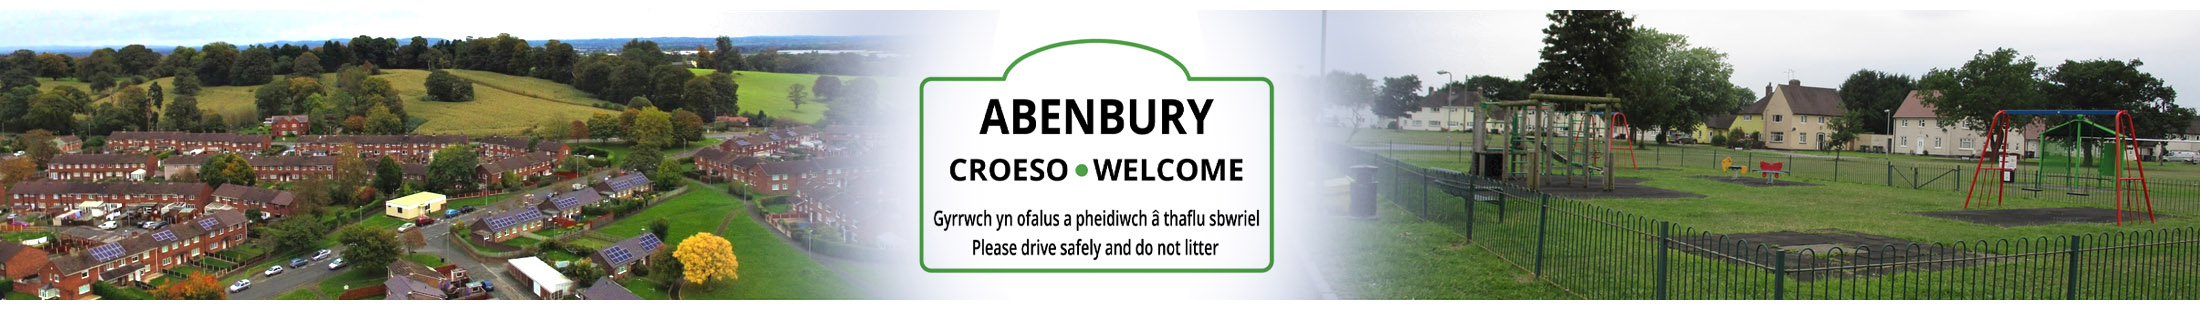 Header Image for Abenbury Community Council